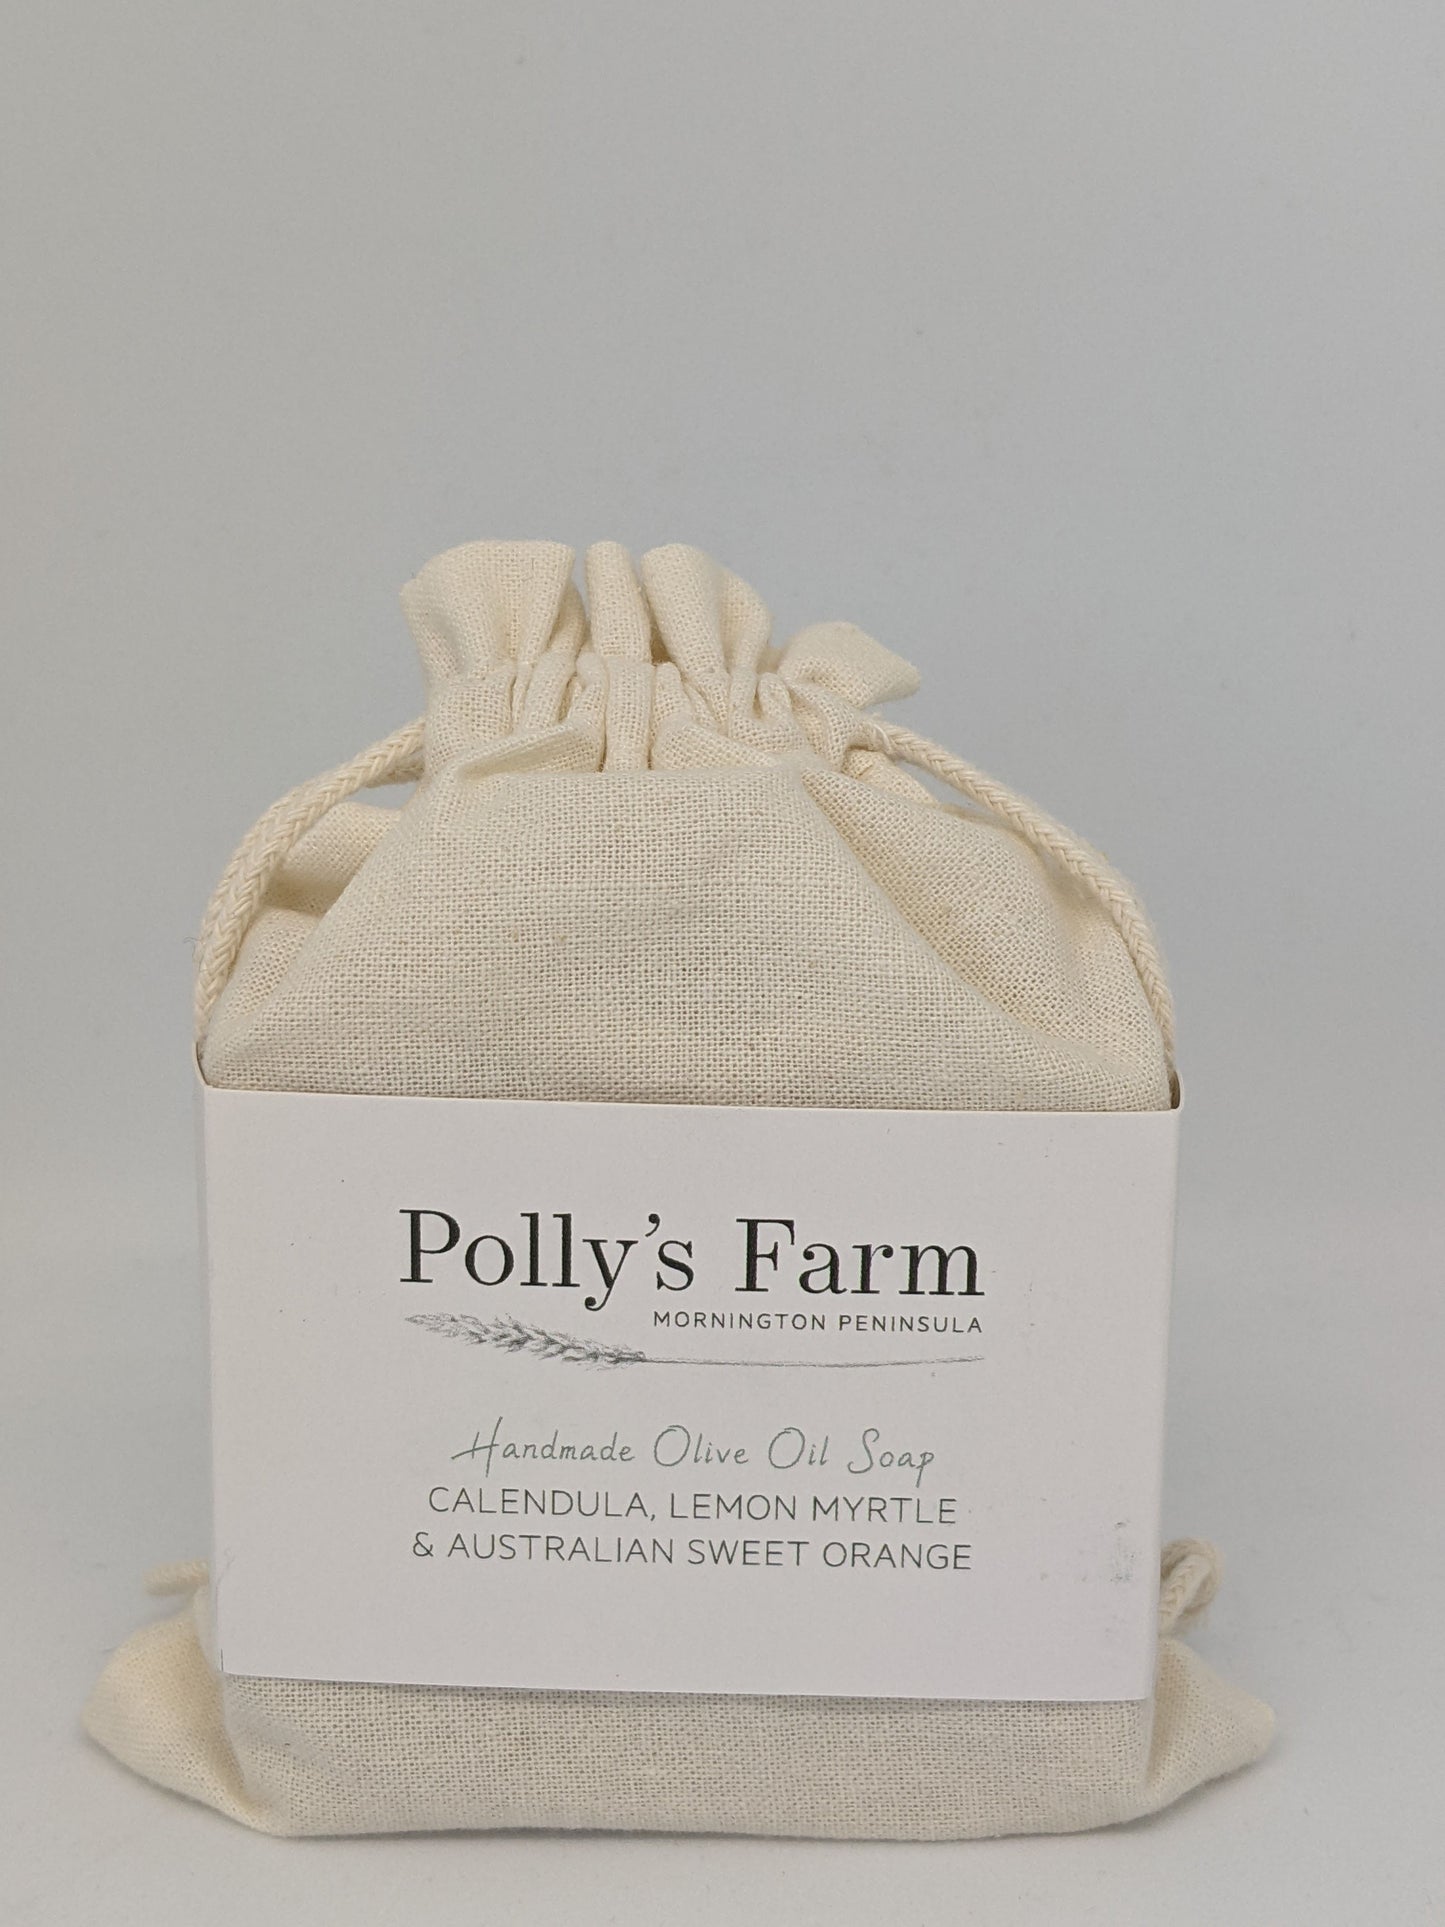 Handmade olive oil Calendula lemon myrtle artisan soap by Polly's Farm Mornington Peninsula